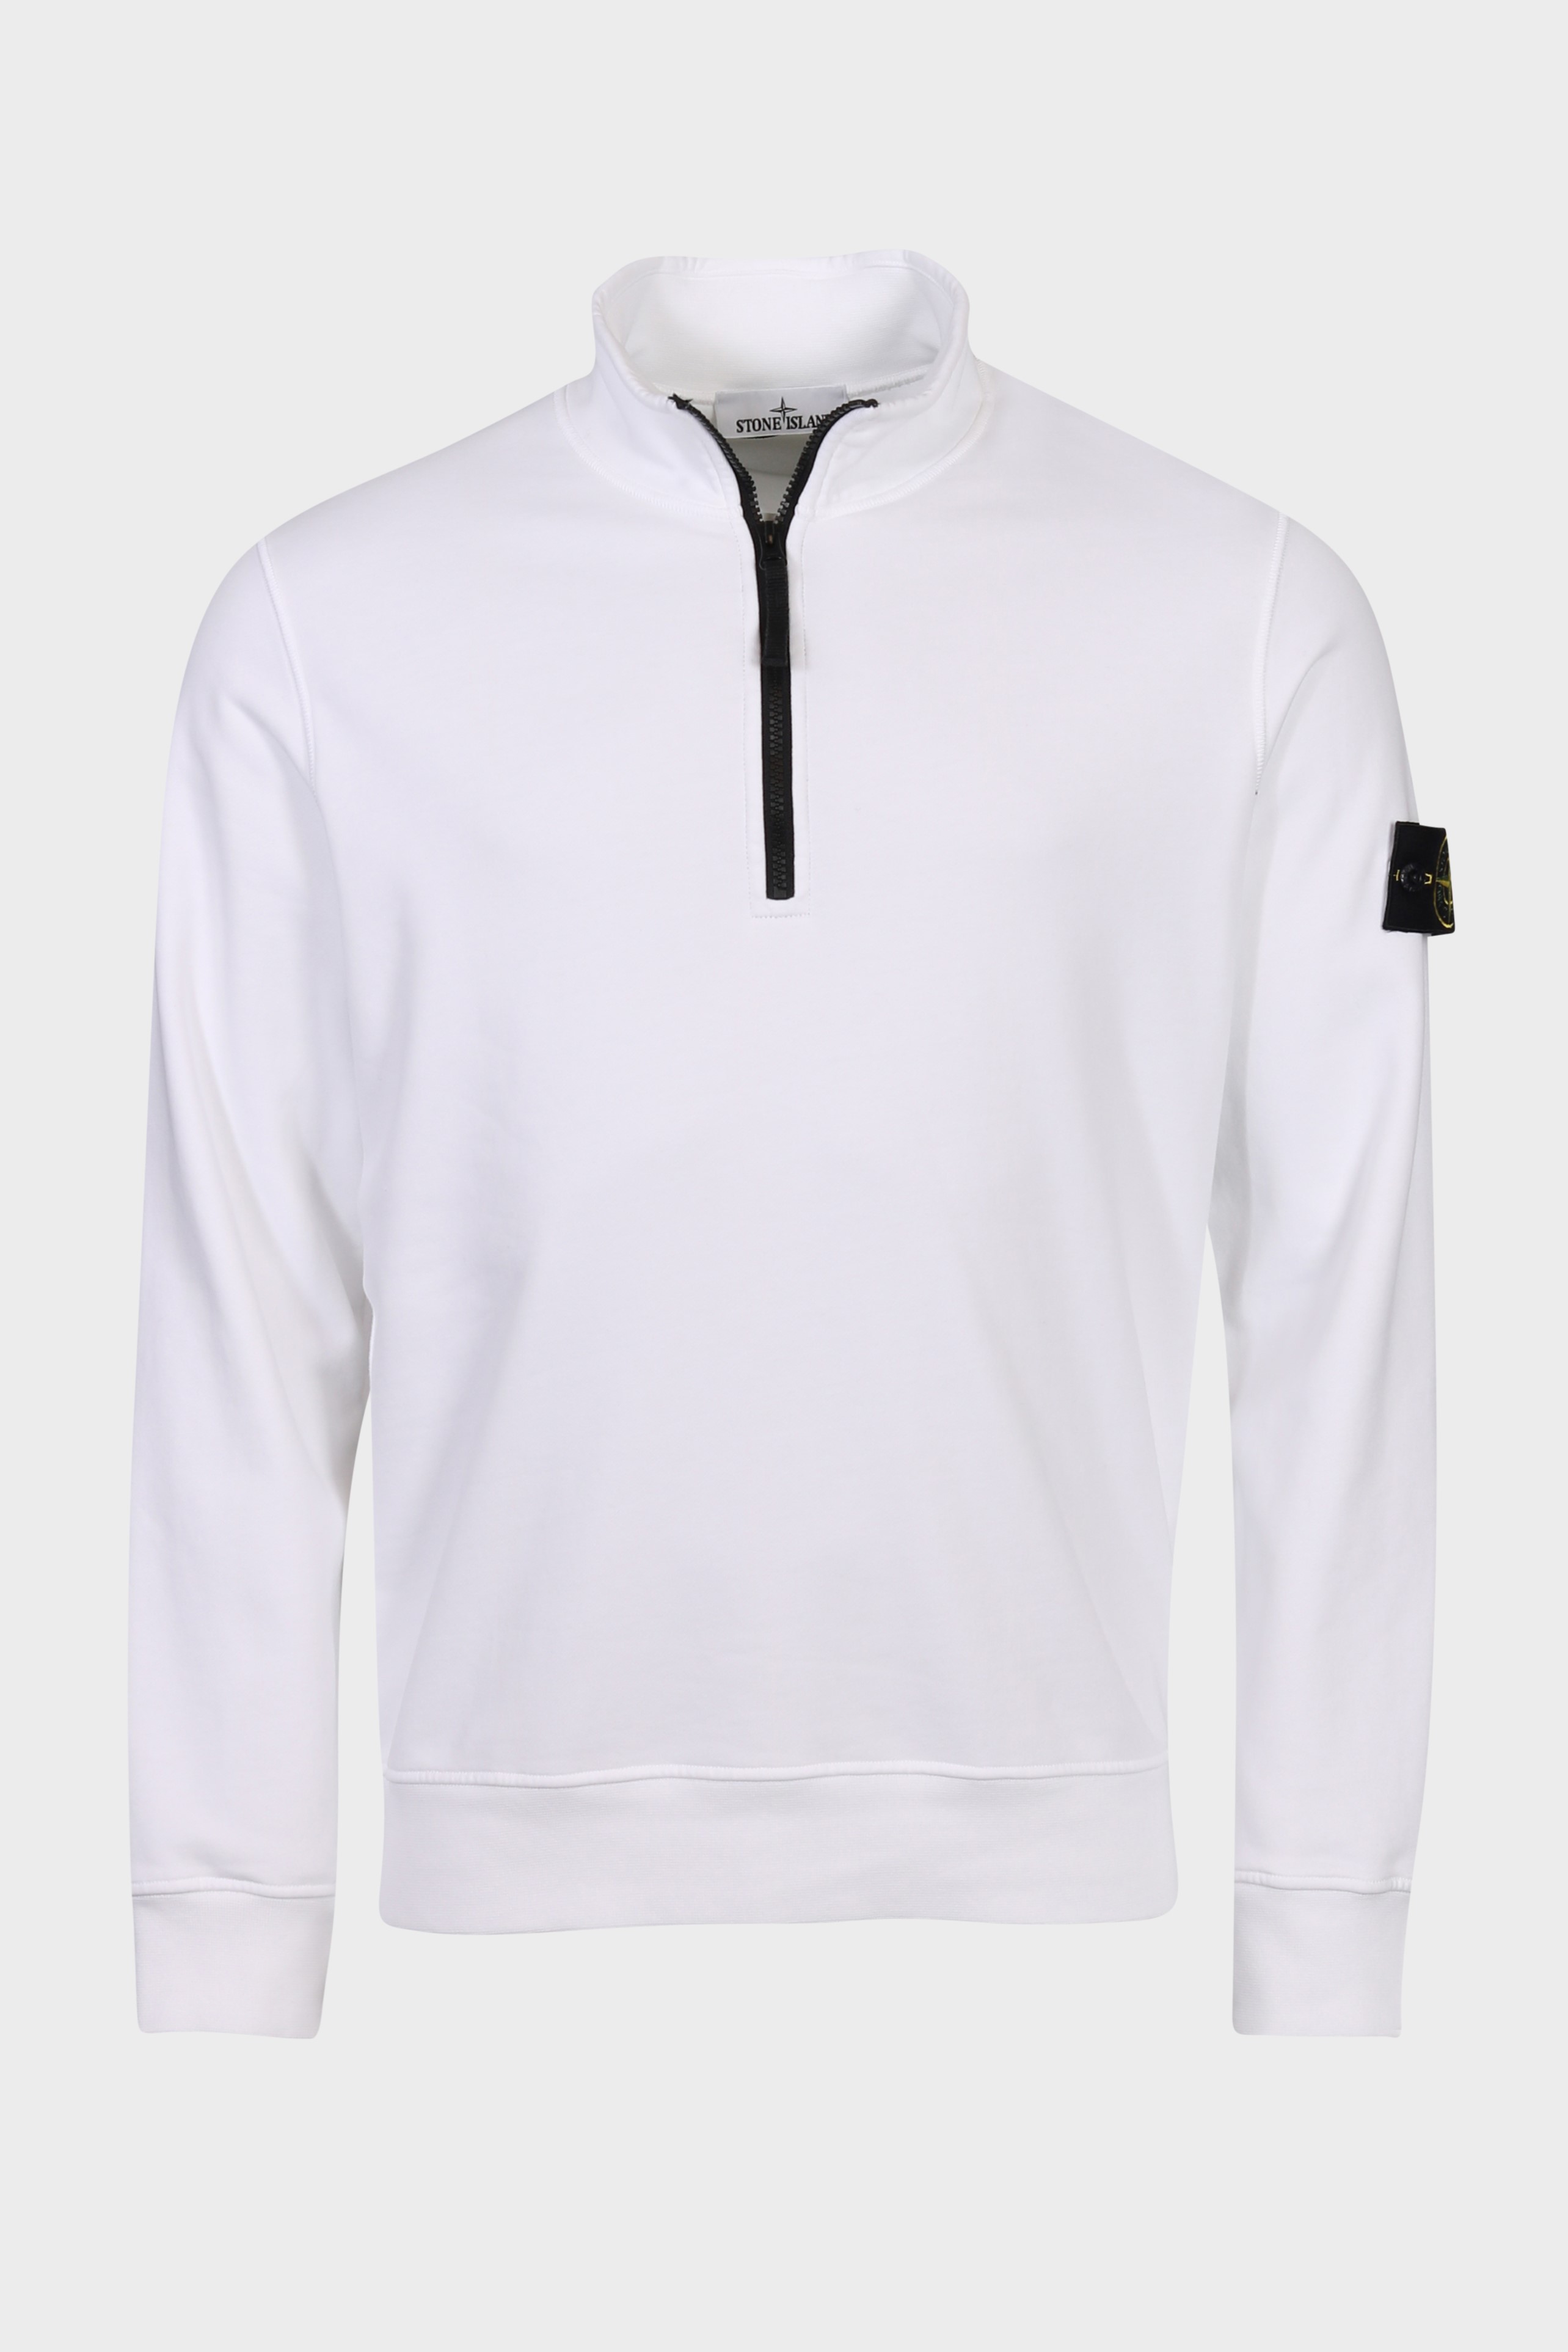 STONE ISLAND Half Zip Sweatshirt in White 2XL